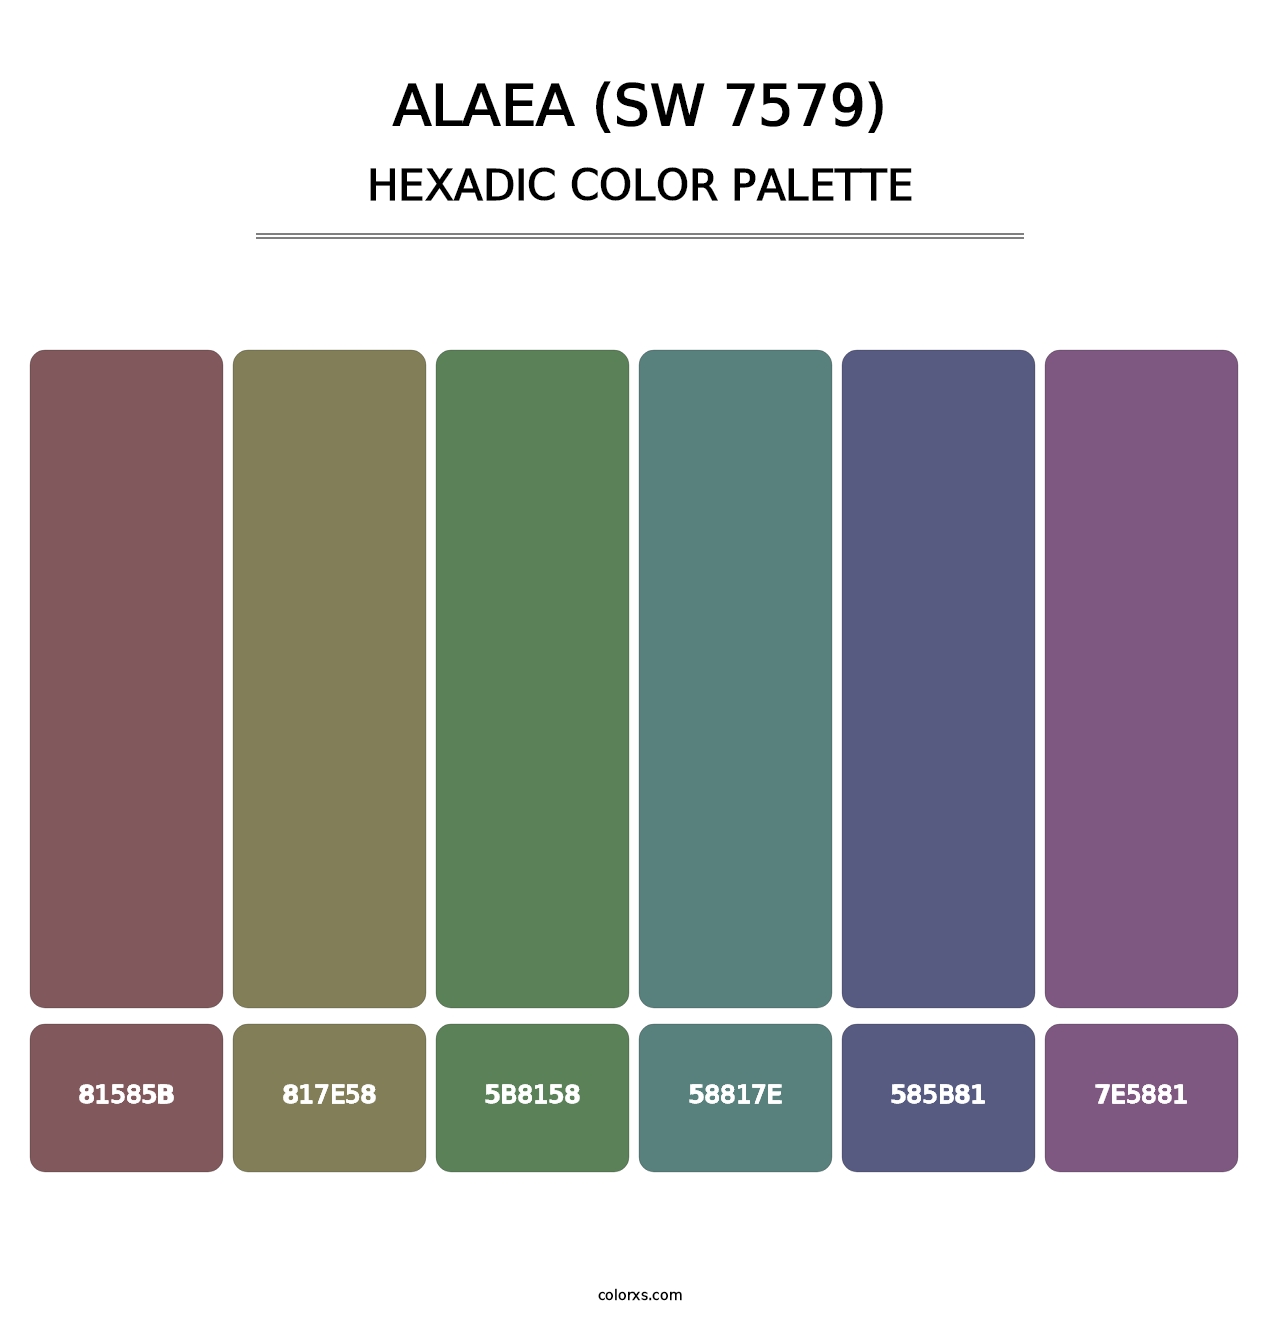 Alaea (SW 7579) - Hexadic Color Palette